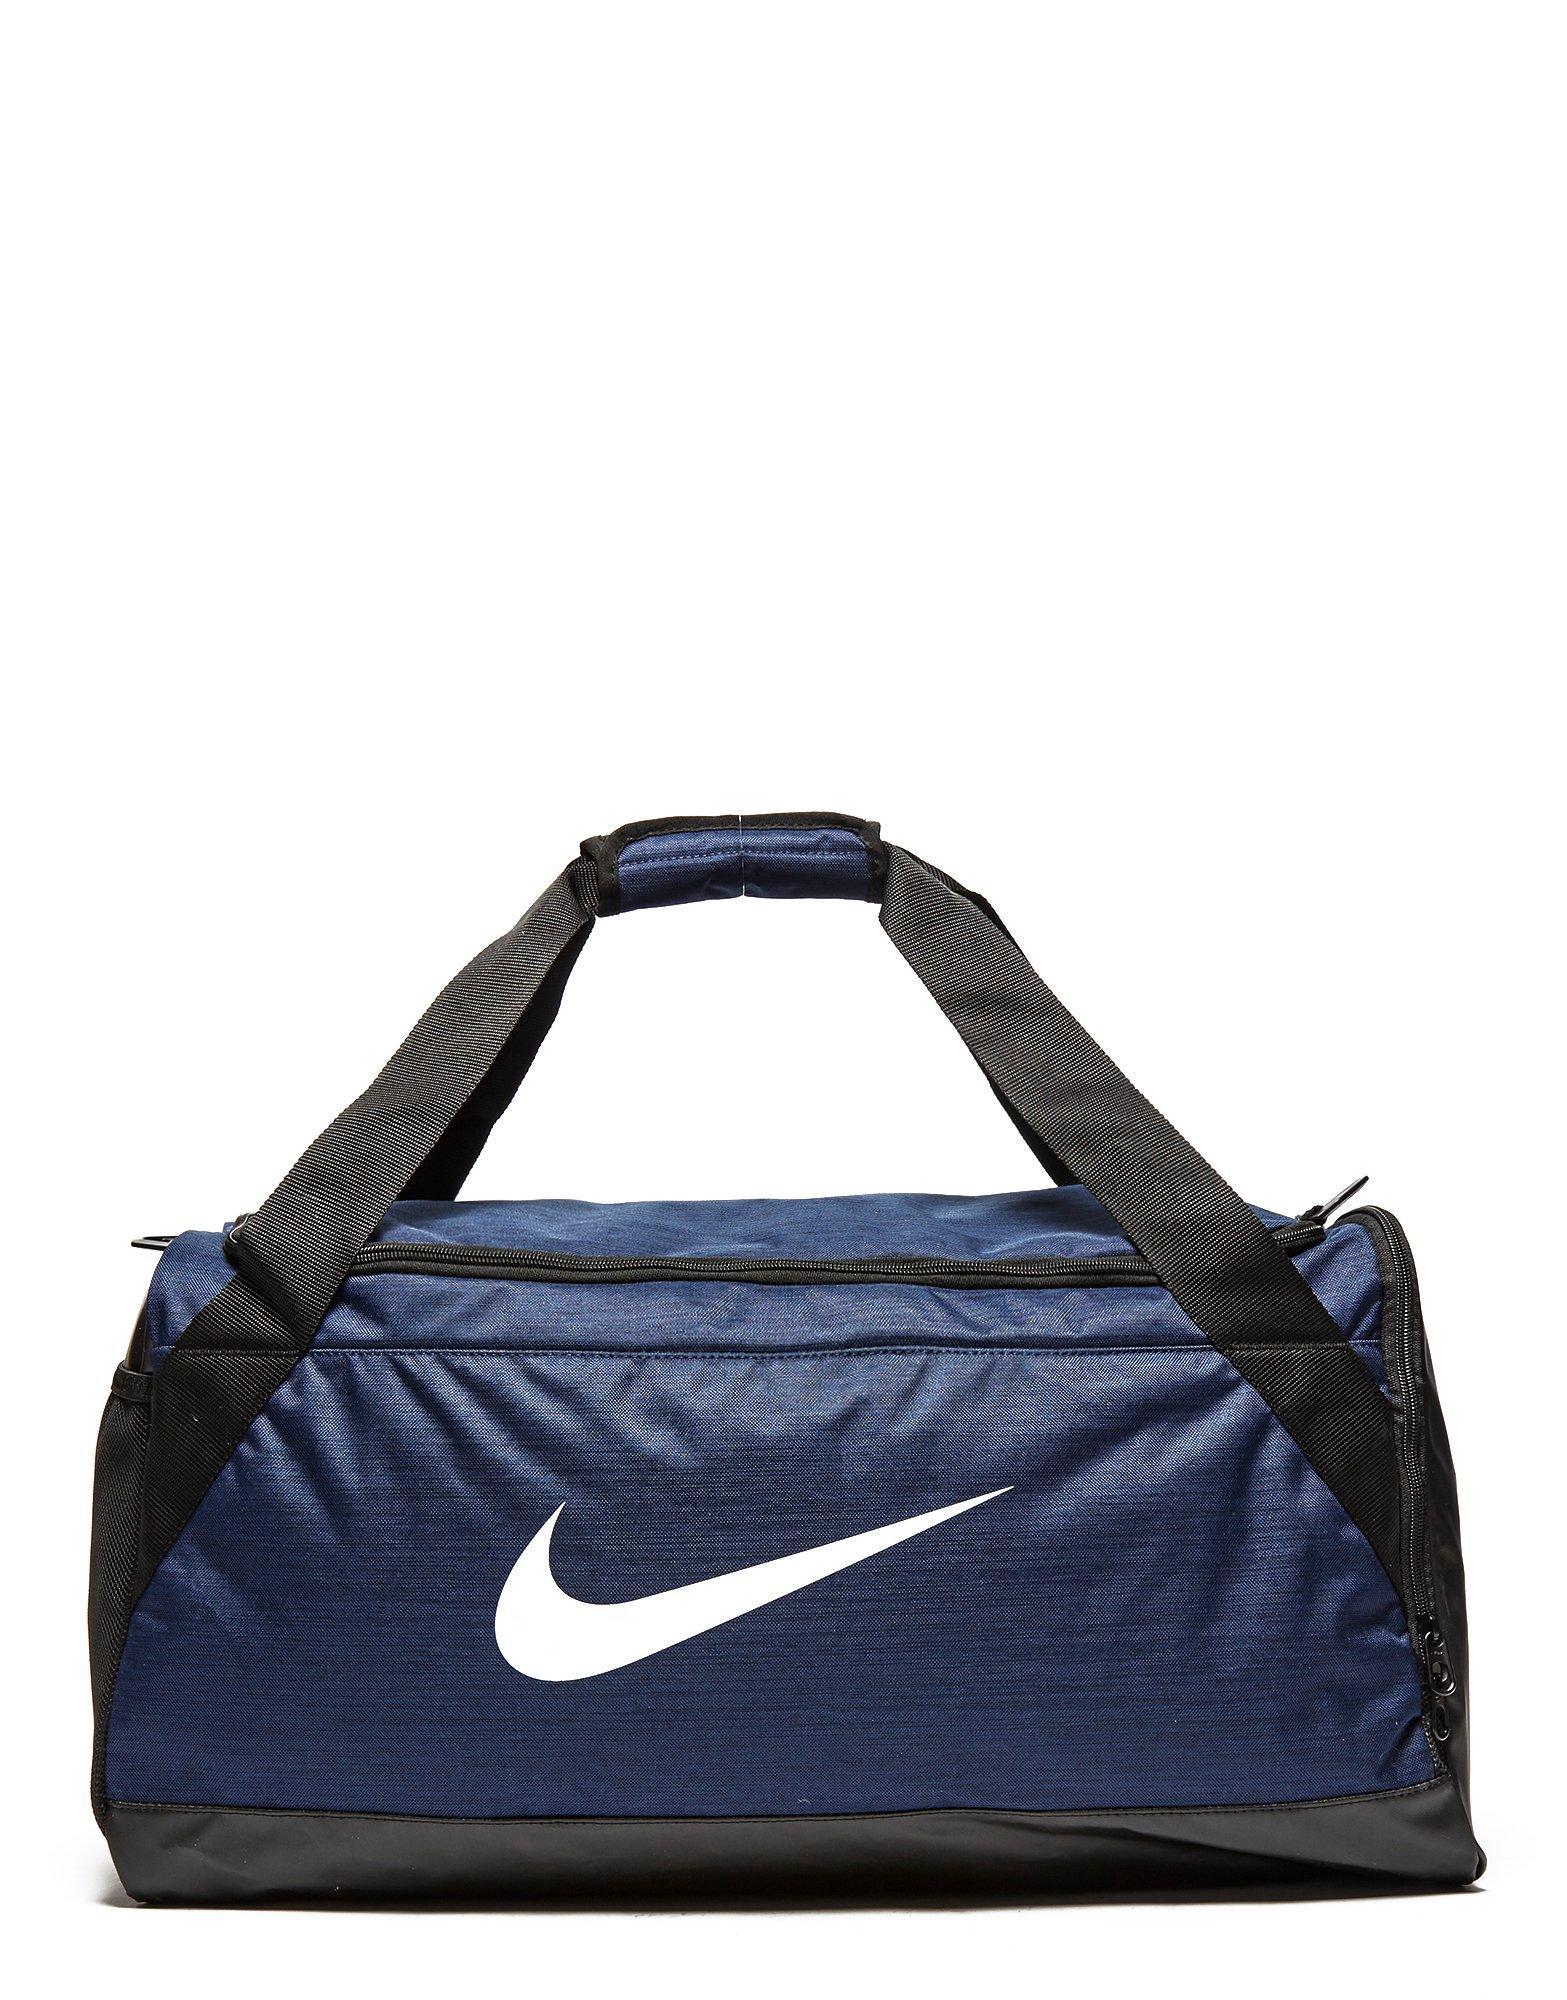 Nike Synthetic Brasilia Medium Duffle Bag in Navy (Blue) for Men - Lyst